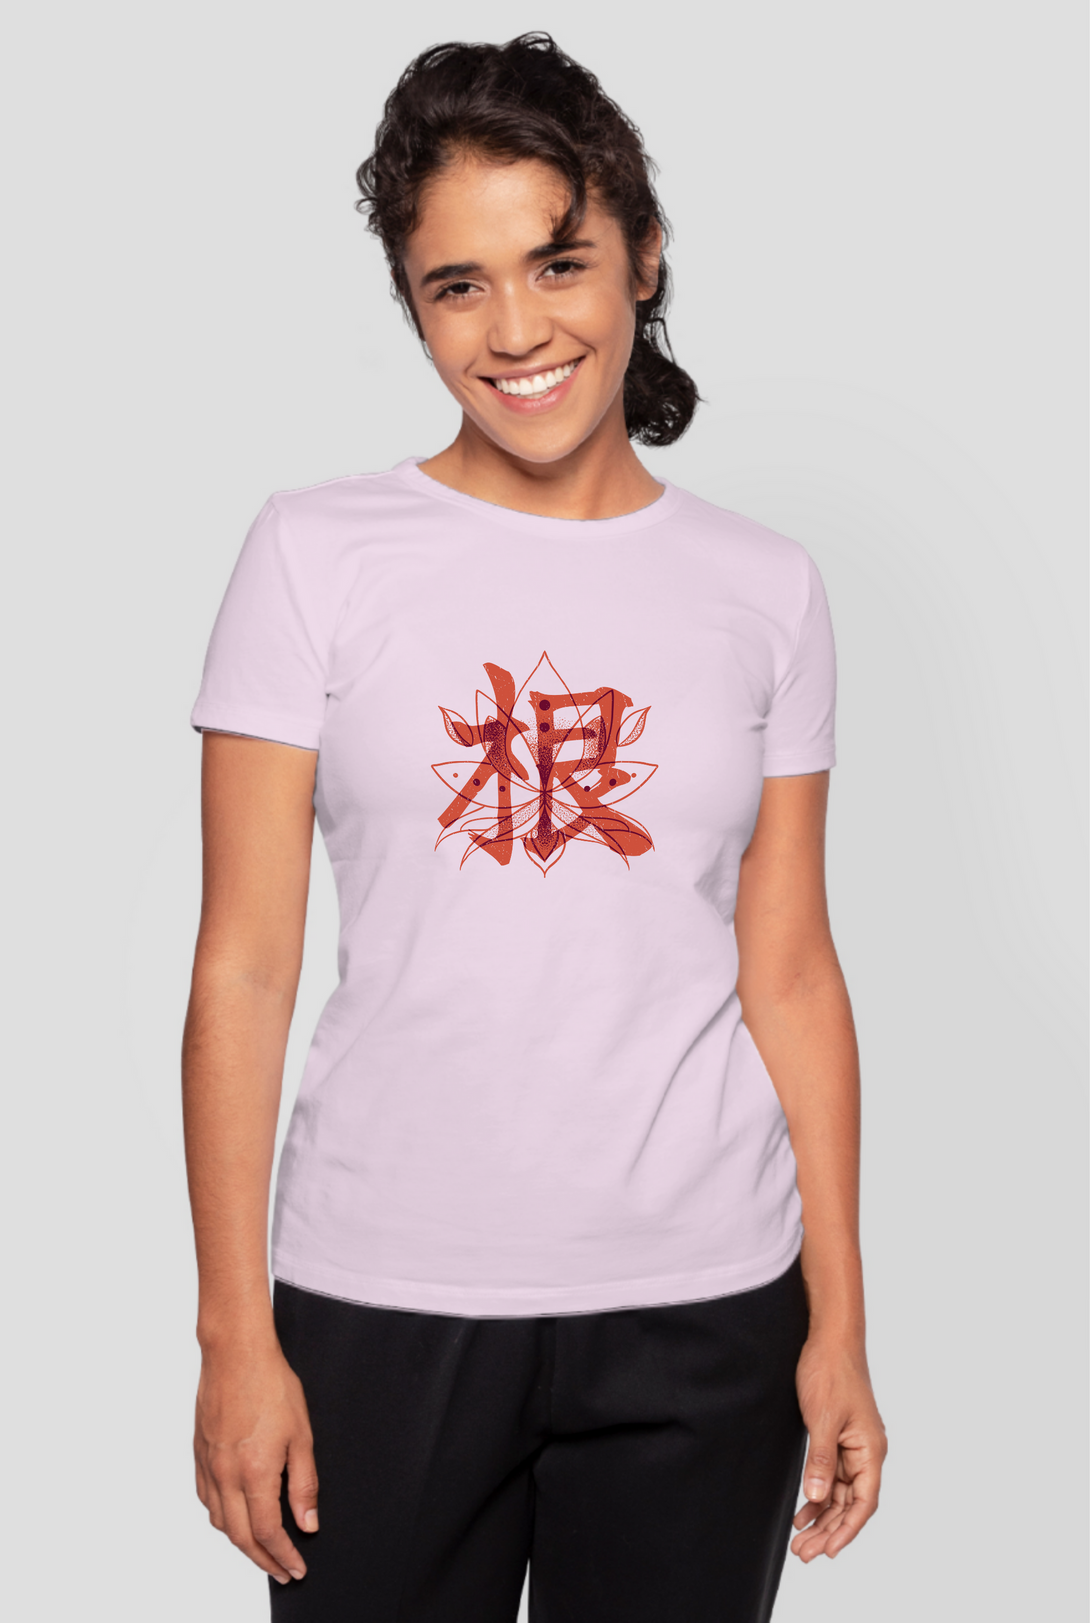 Blossom Zen Lotus Printed T-Shirt For Women - WowWaves - 13